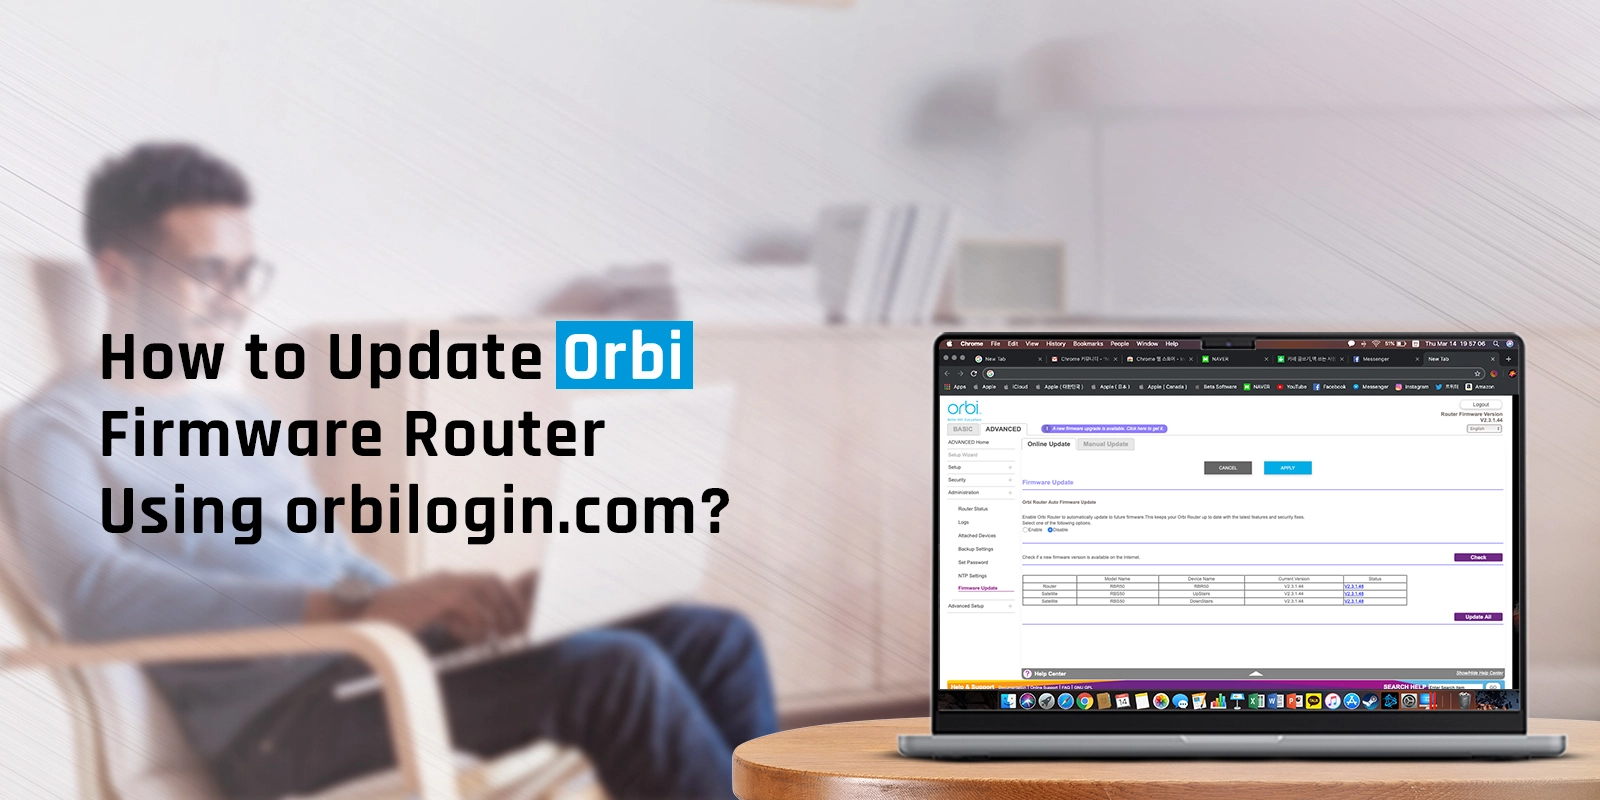 Update Orbi Firmware Router